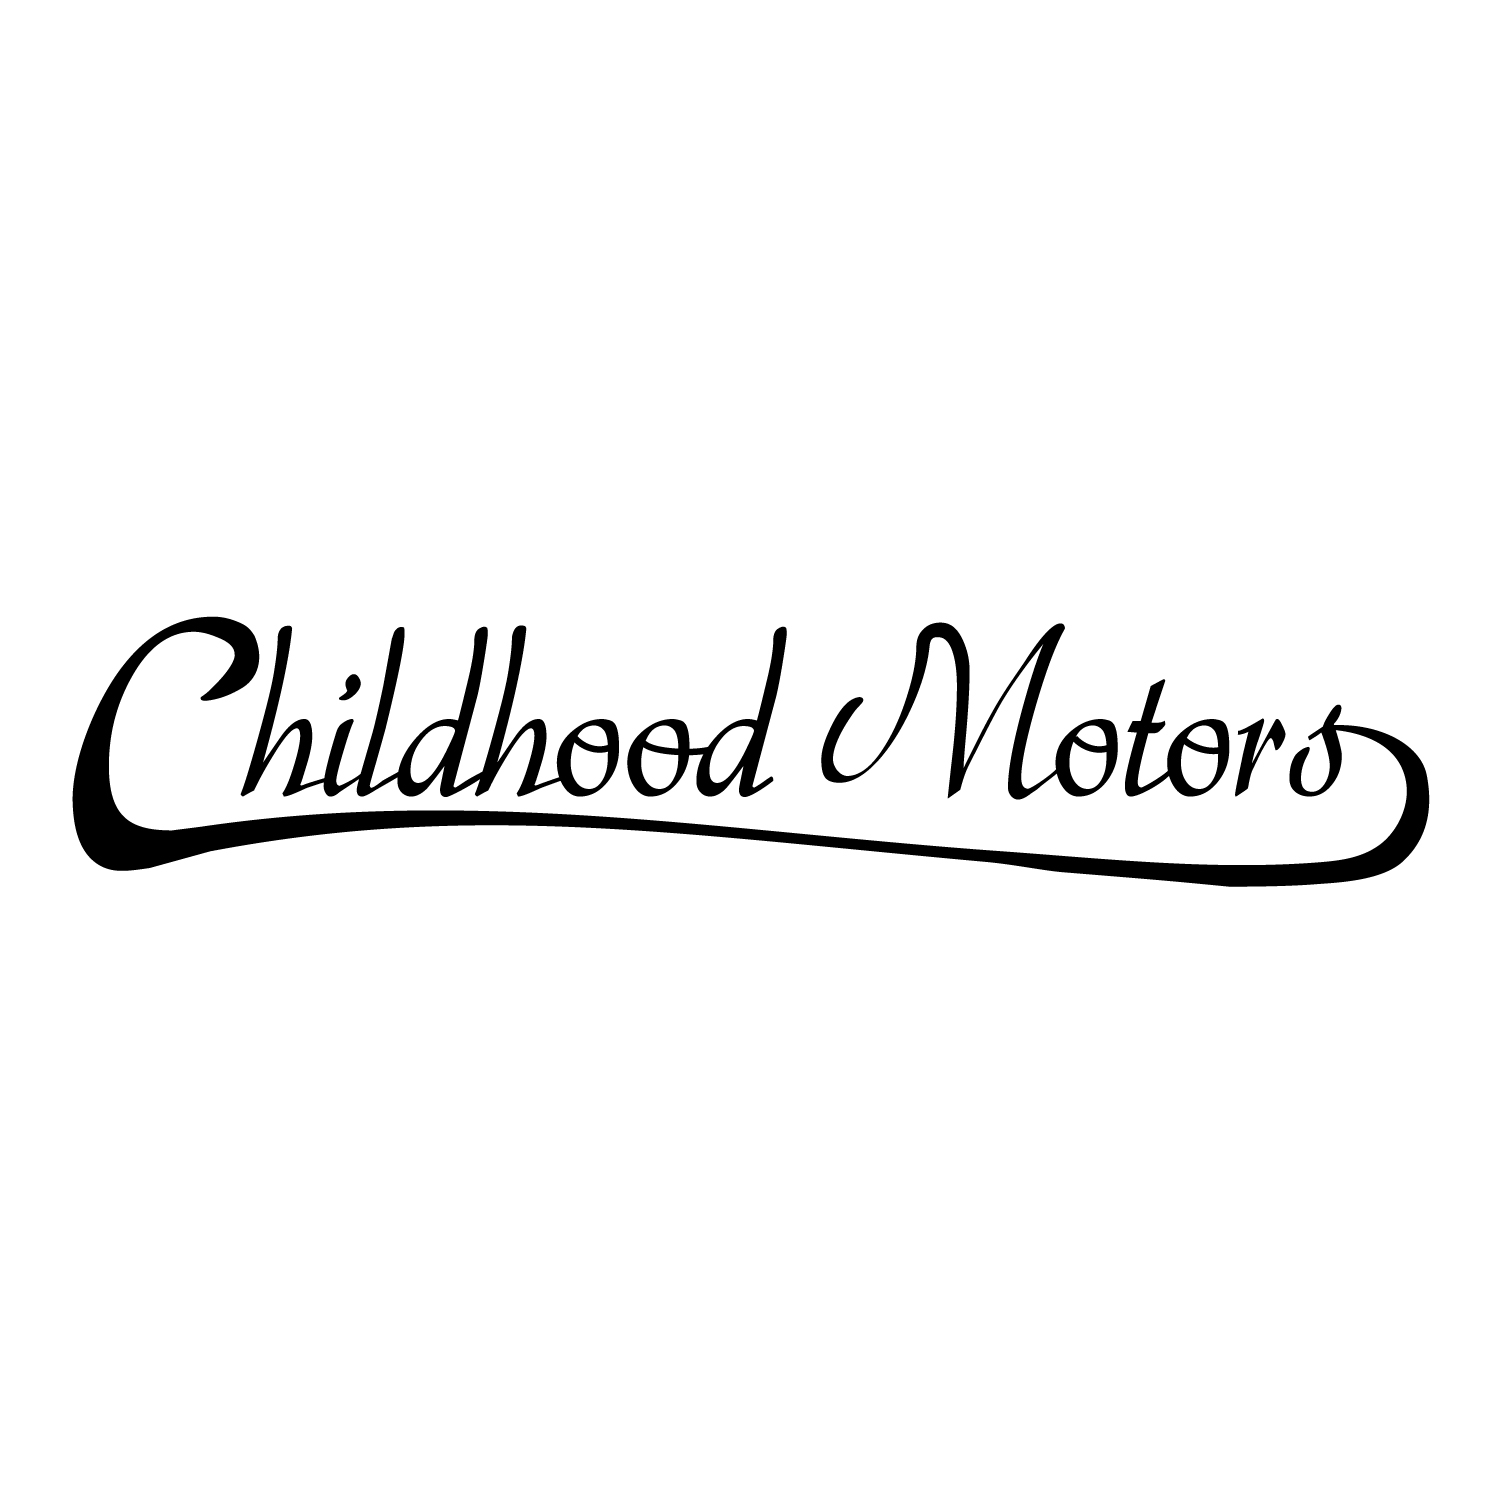 Childhood Motors(1)